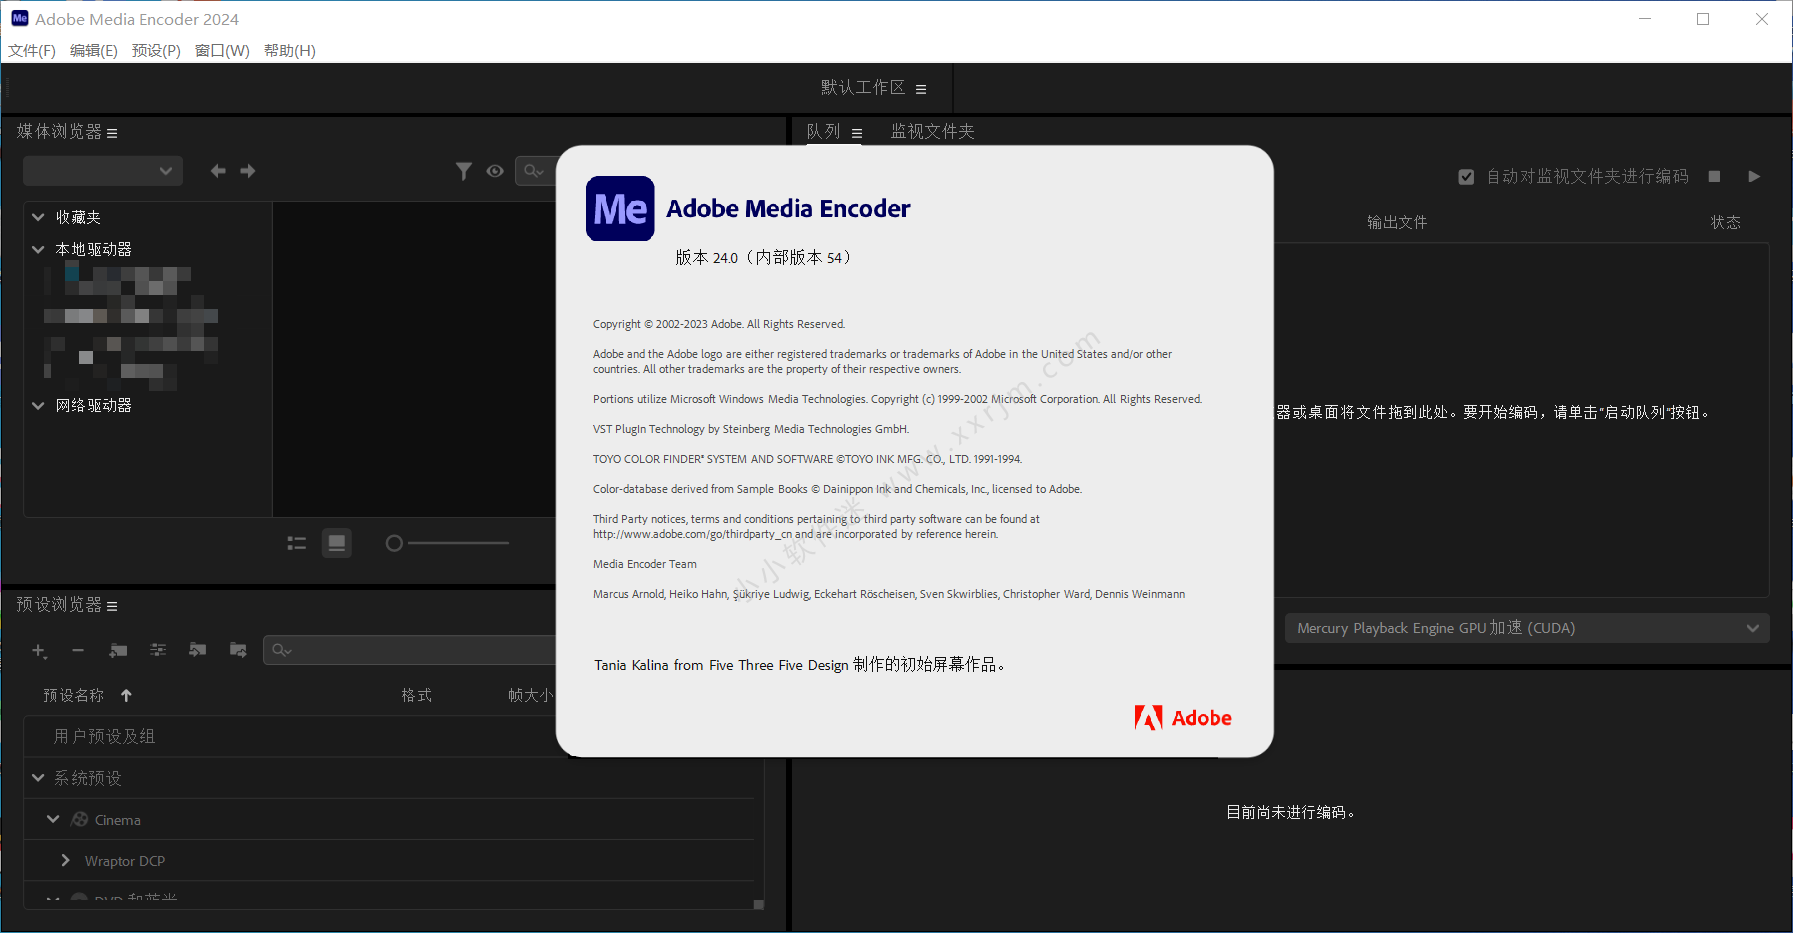 Adobe Media Encoder 2024 v24.0.0.54 instal the new for mac